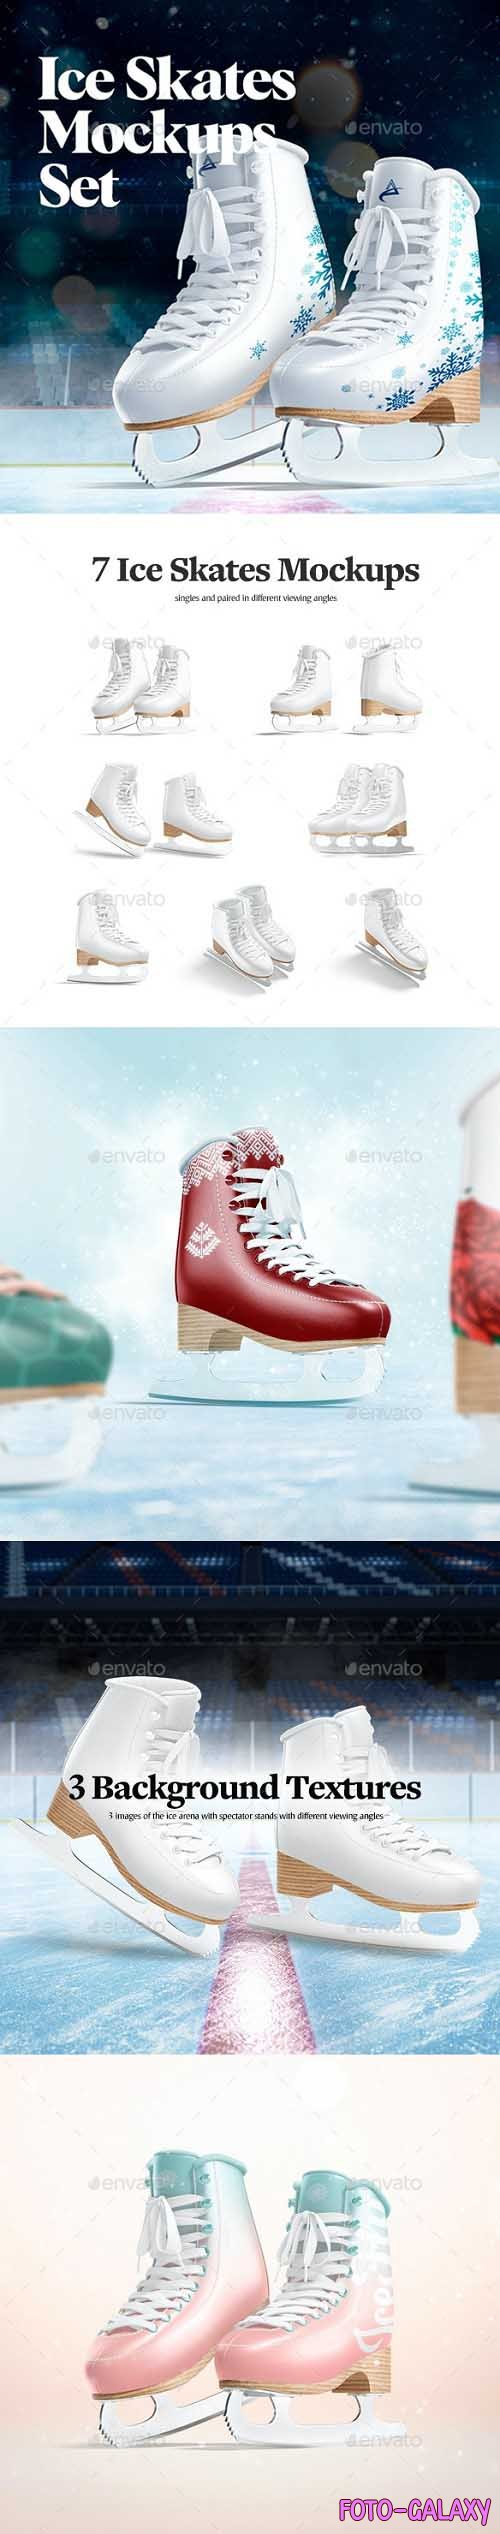 Ice Skates Mockups Set - 34804259 - 6663016